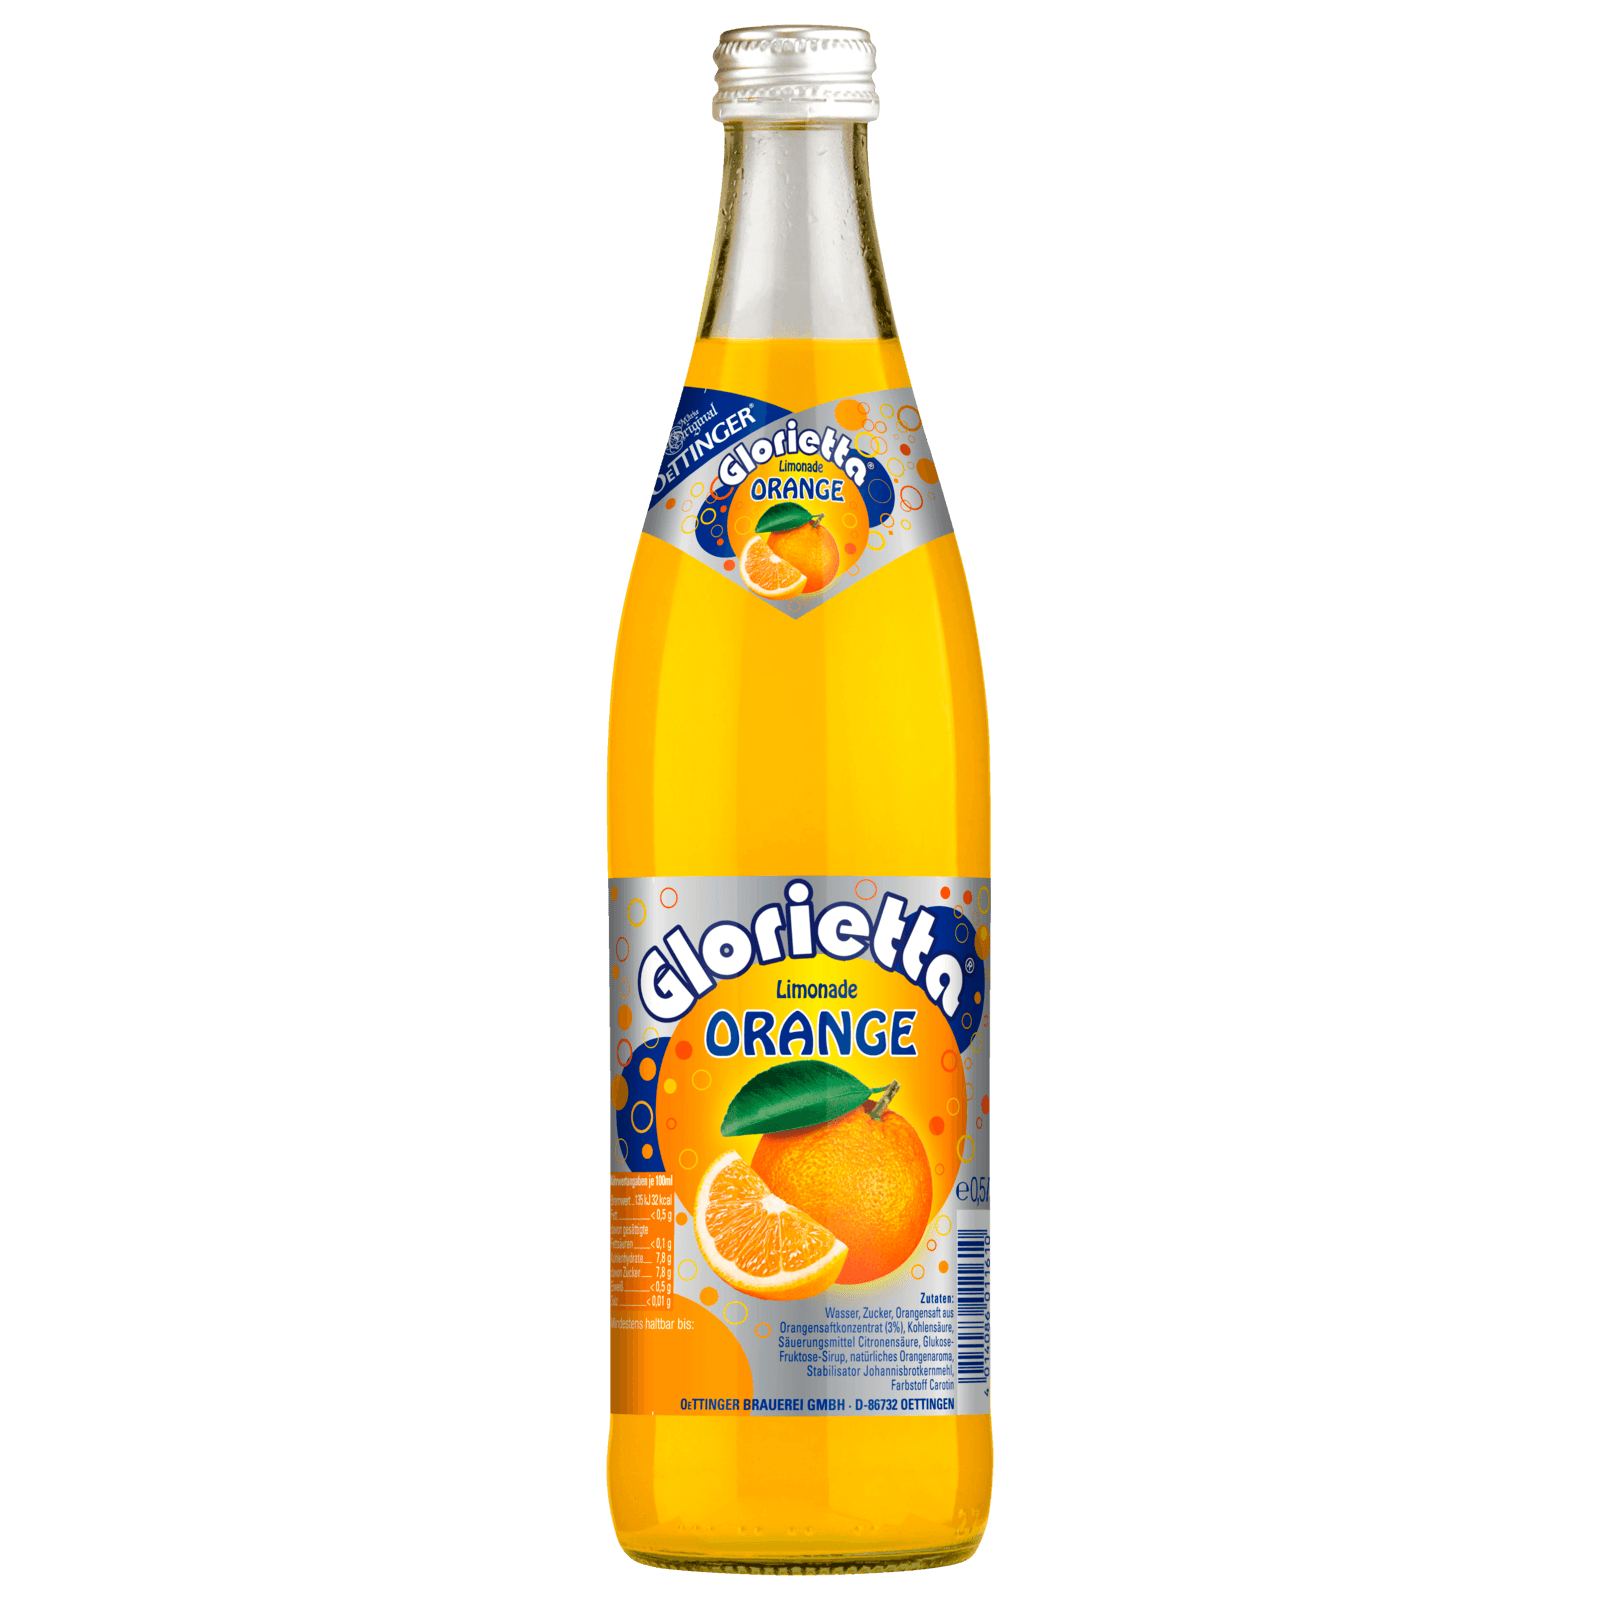 Glorietta Orangenlimonade 0,5l bei REWE online bestellen!